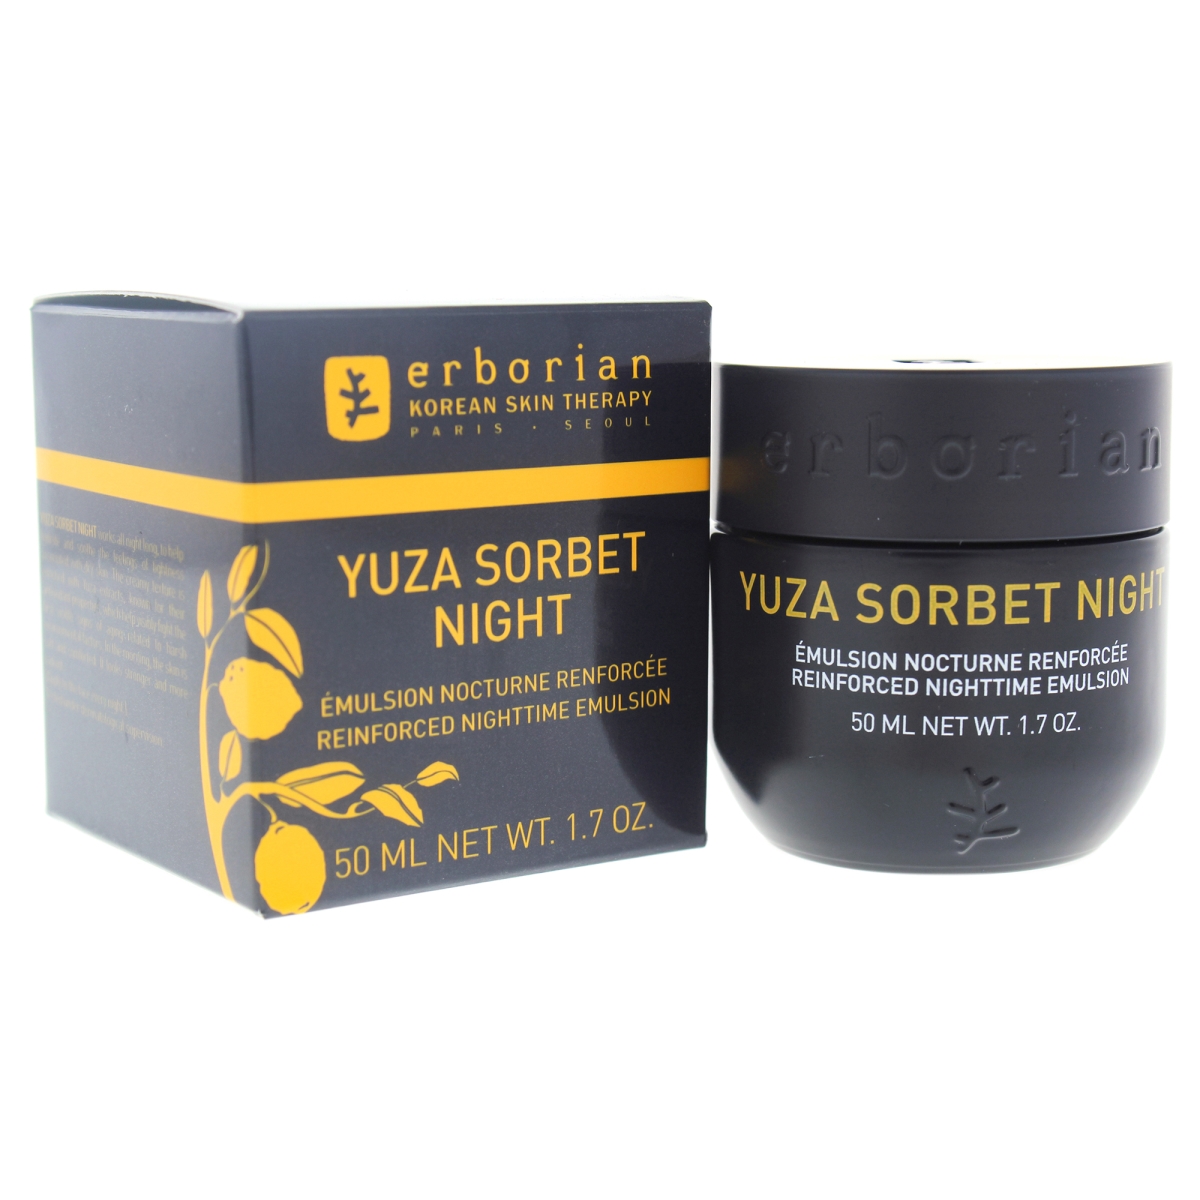 I0087411 Yuza Sorbet Night Reinforced Nighttime Emulsion For Women - 1.7 Oz